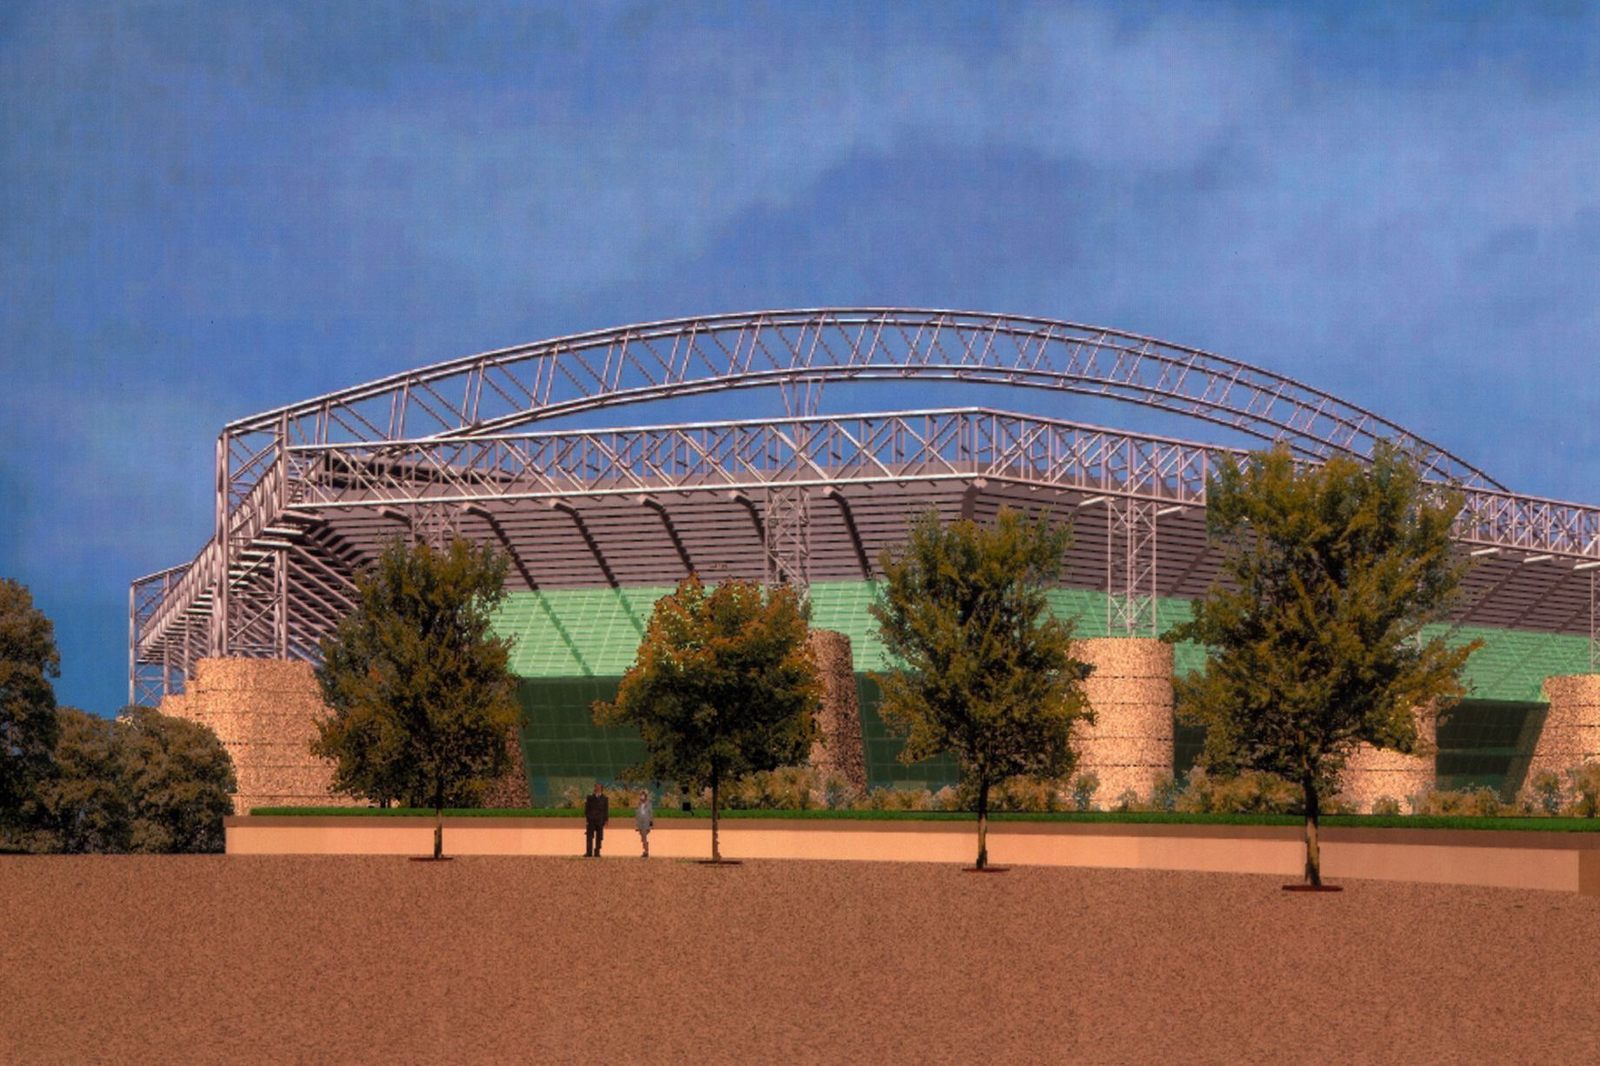 Newcastle United Stadium / Leazes Park